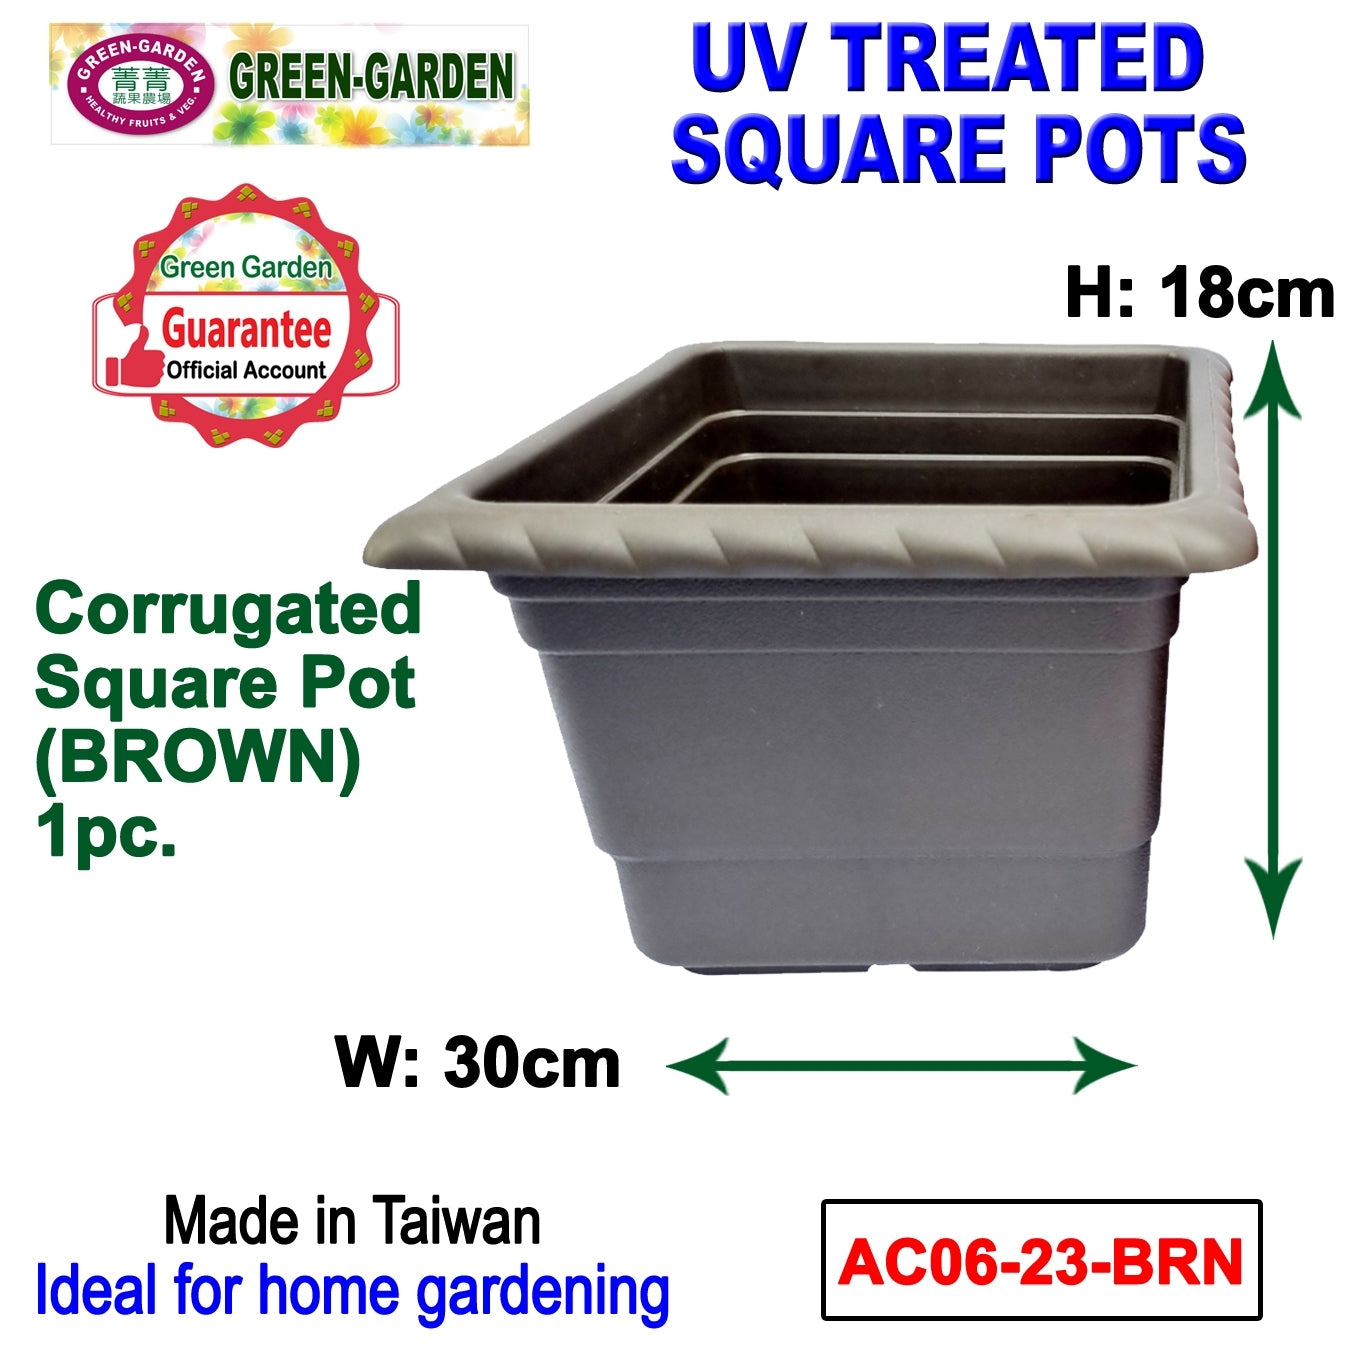 UV TREATED Corrugated Square Pot Size: 30x30x18cm